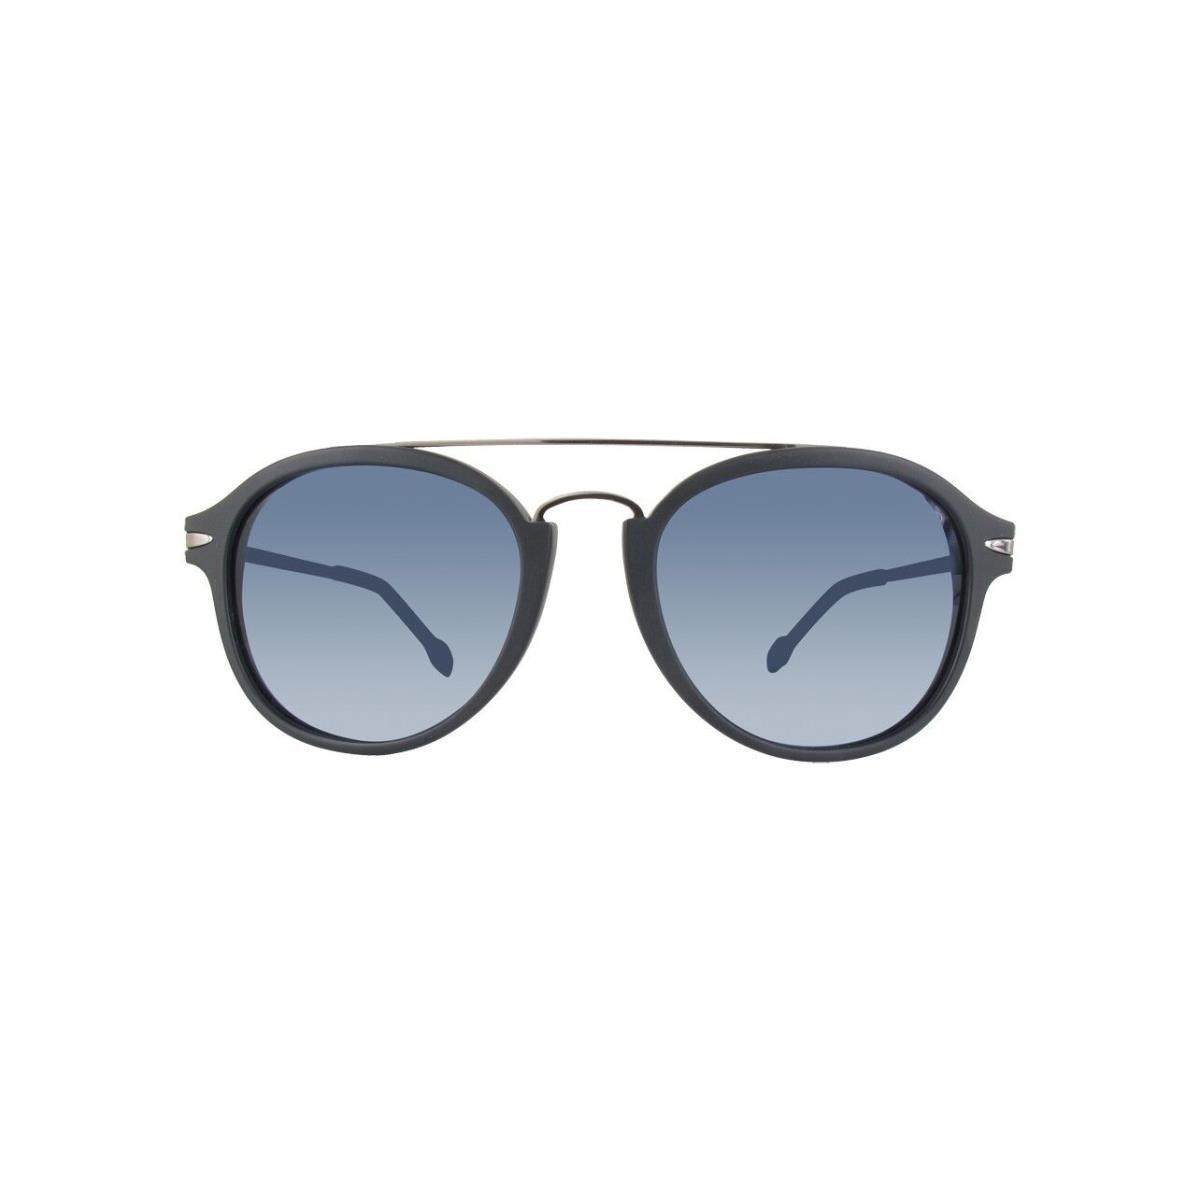 Gianfranco Ferre Unisex Round Sunglasses Blue Polarized Lens Matte Black Frame